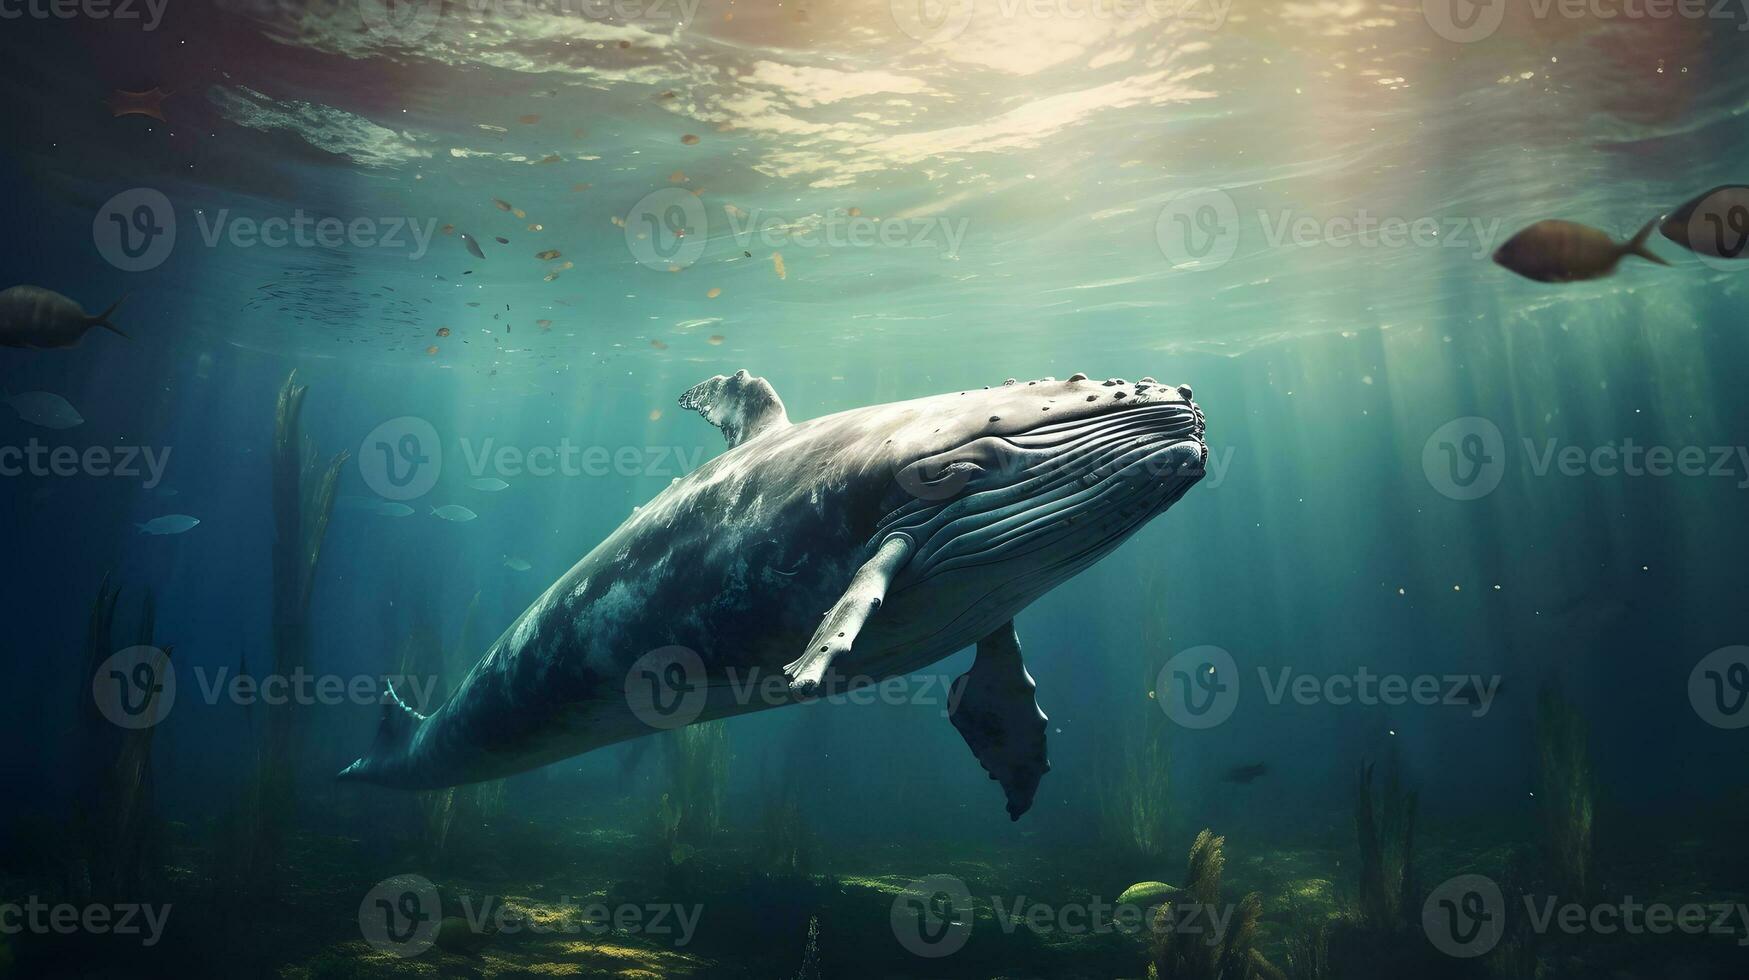 baleia azul nadando no oceano foto